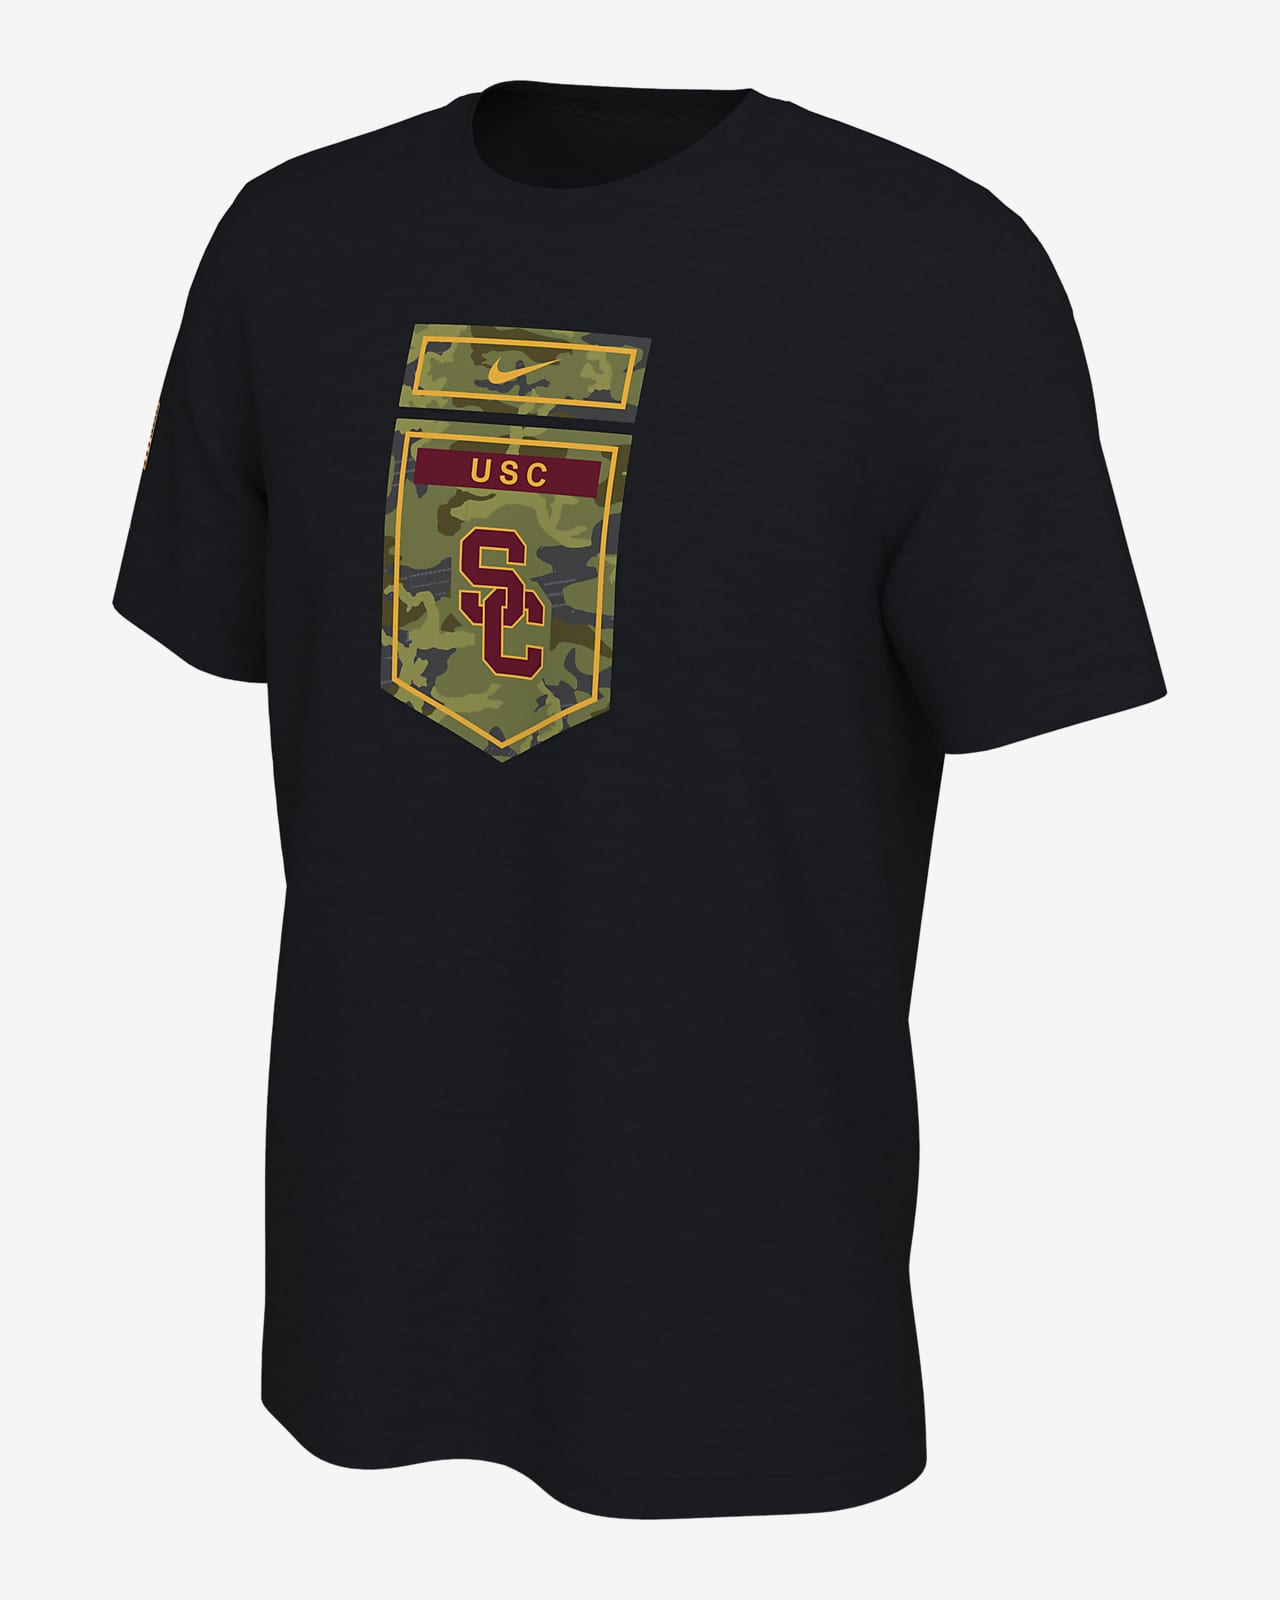 Nike College (USC) Men's T-Shirt